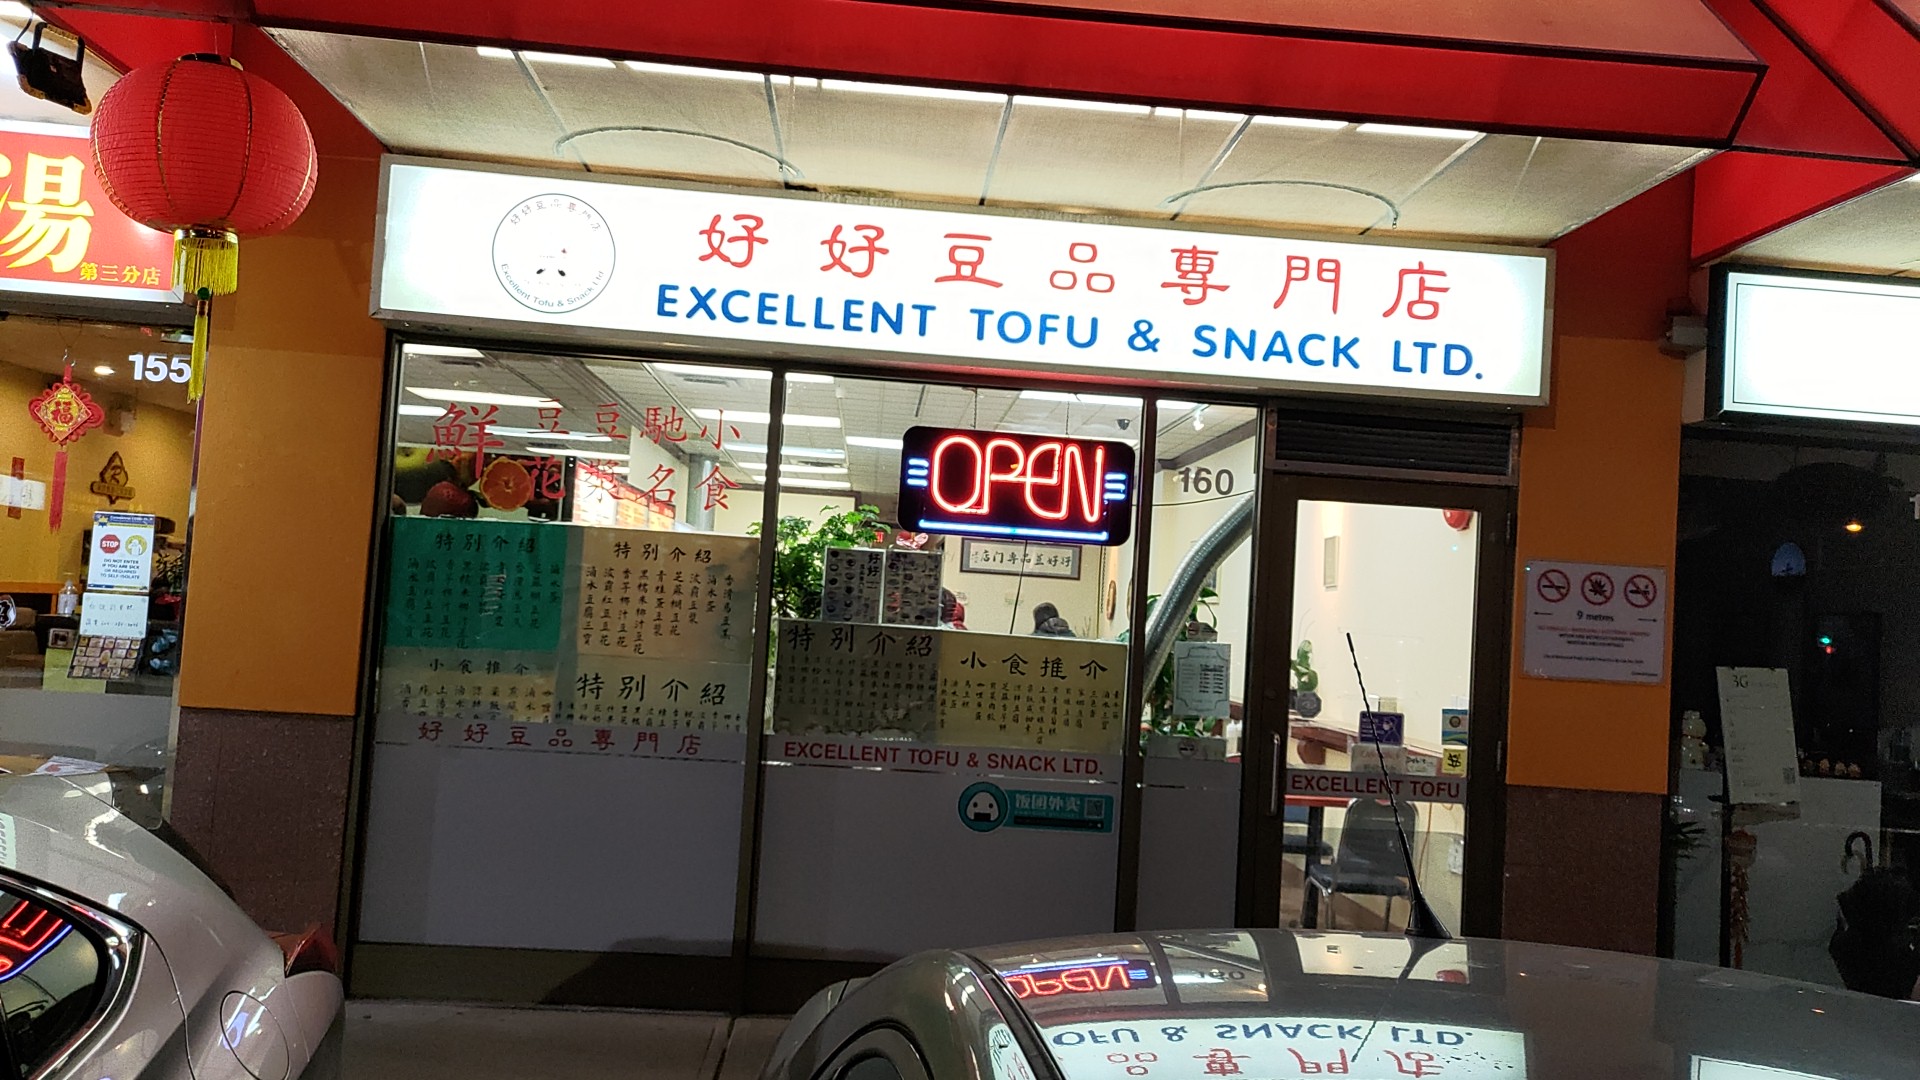 Excellent Tofu & Snacks Ltd.